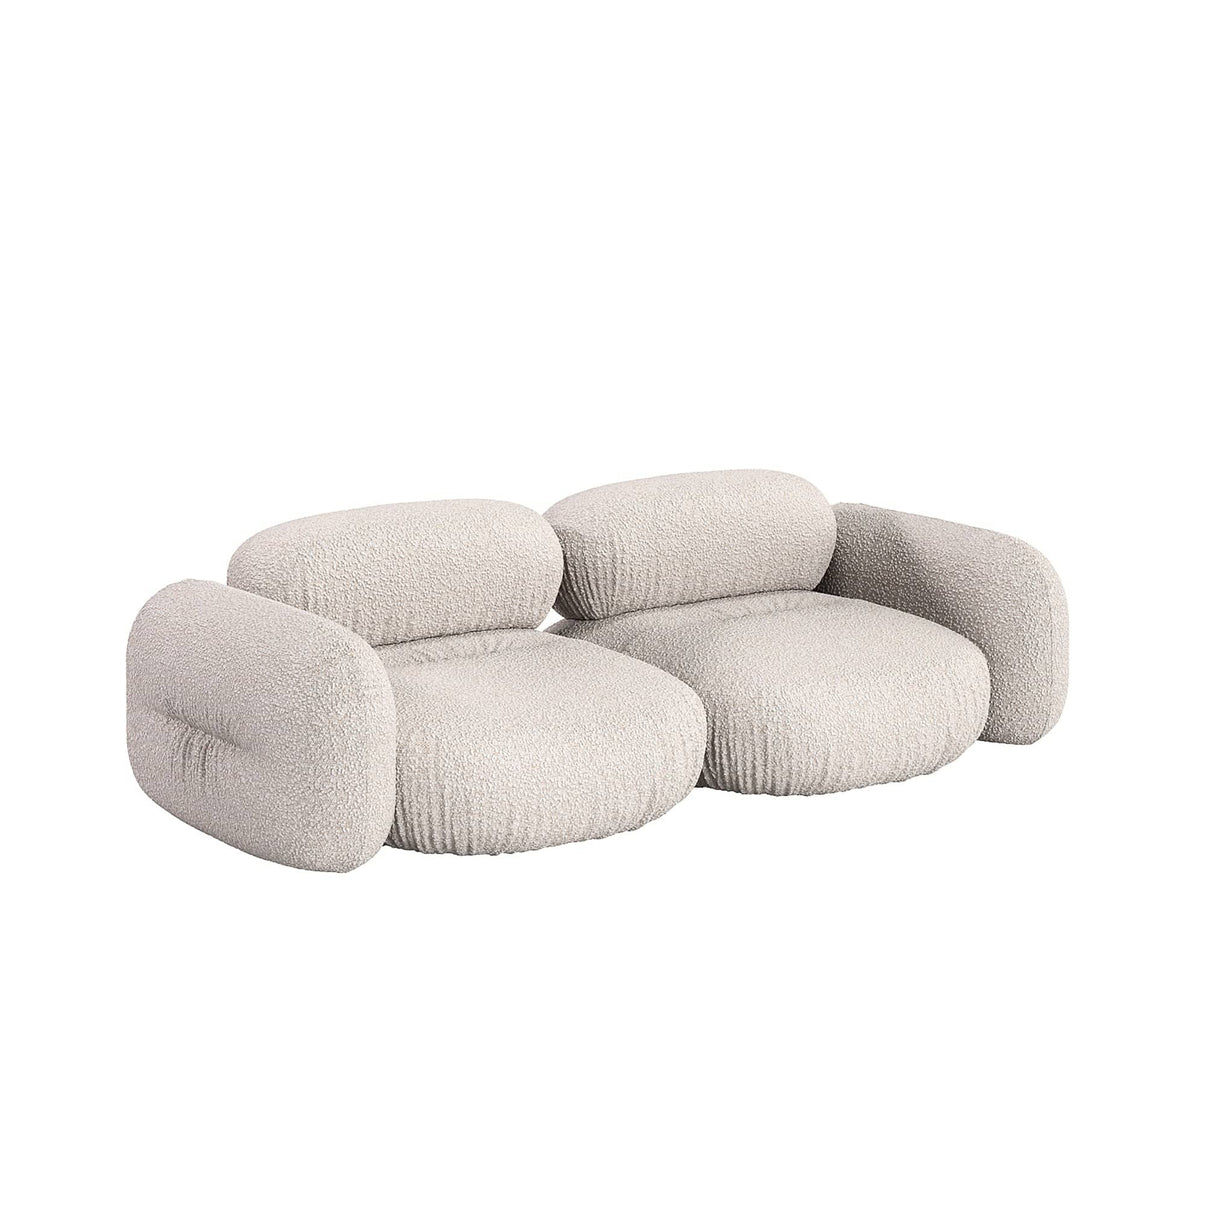 Buy Ondo 3 Seater Sofa - Maya Cream Boucle by Grado online - RJ Living